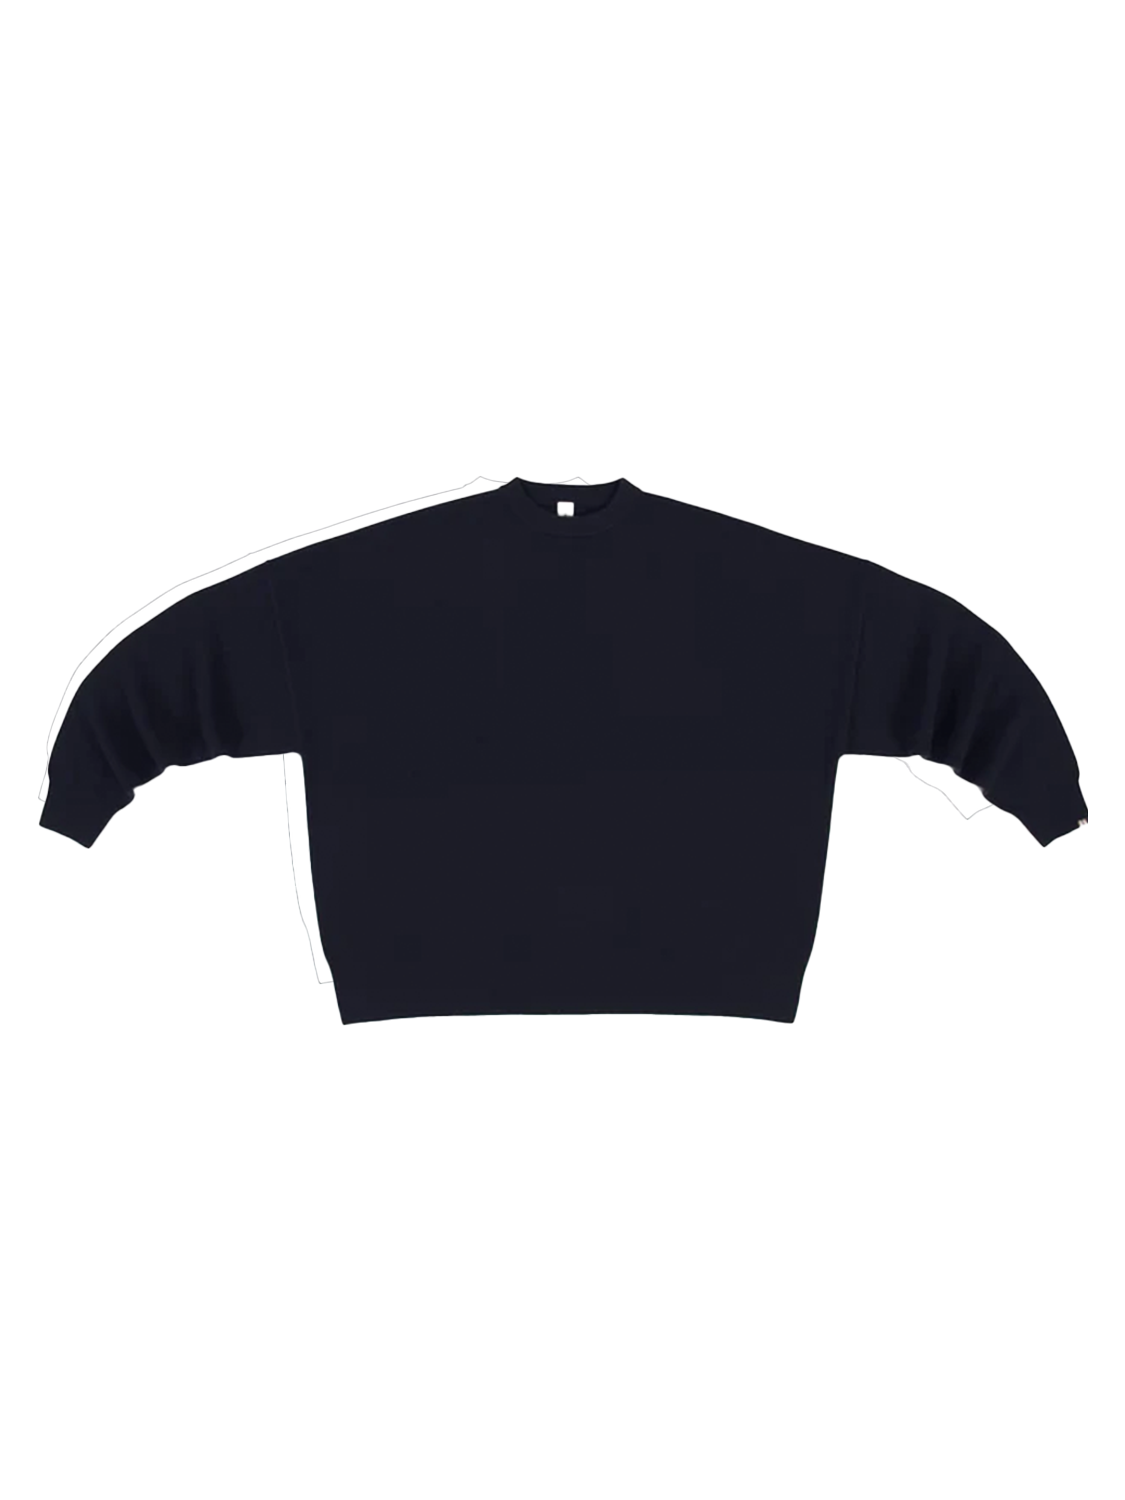 N°246 Juna – Oversized Cashmere Pullover  